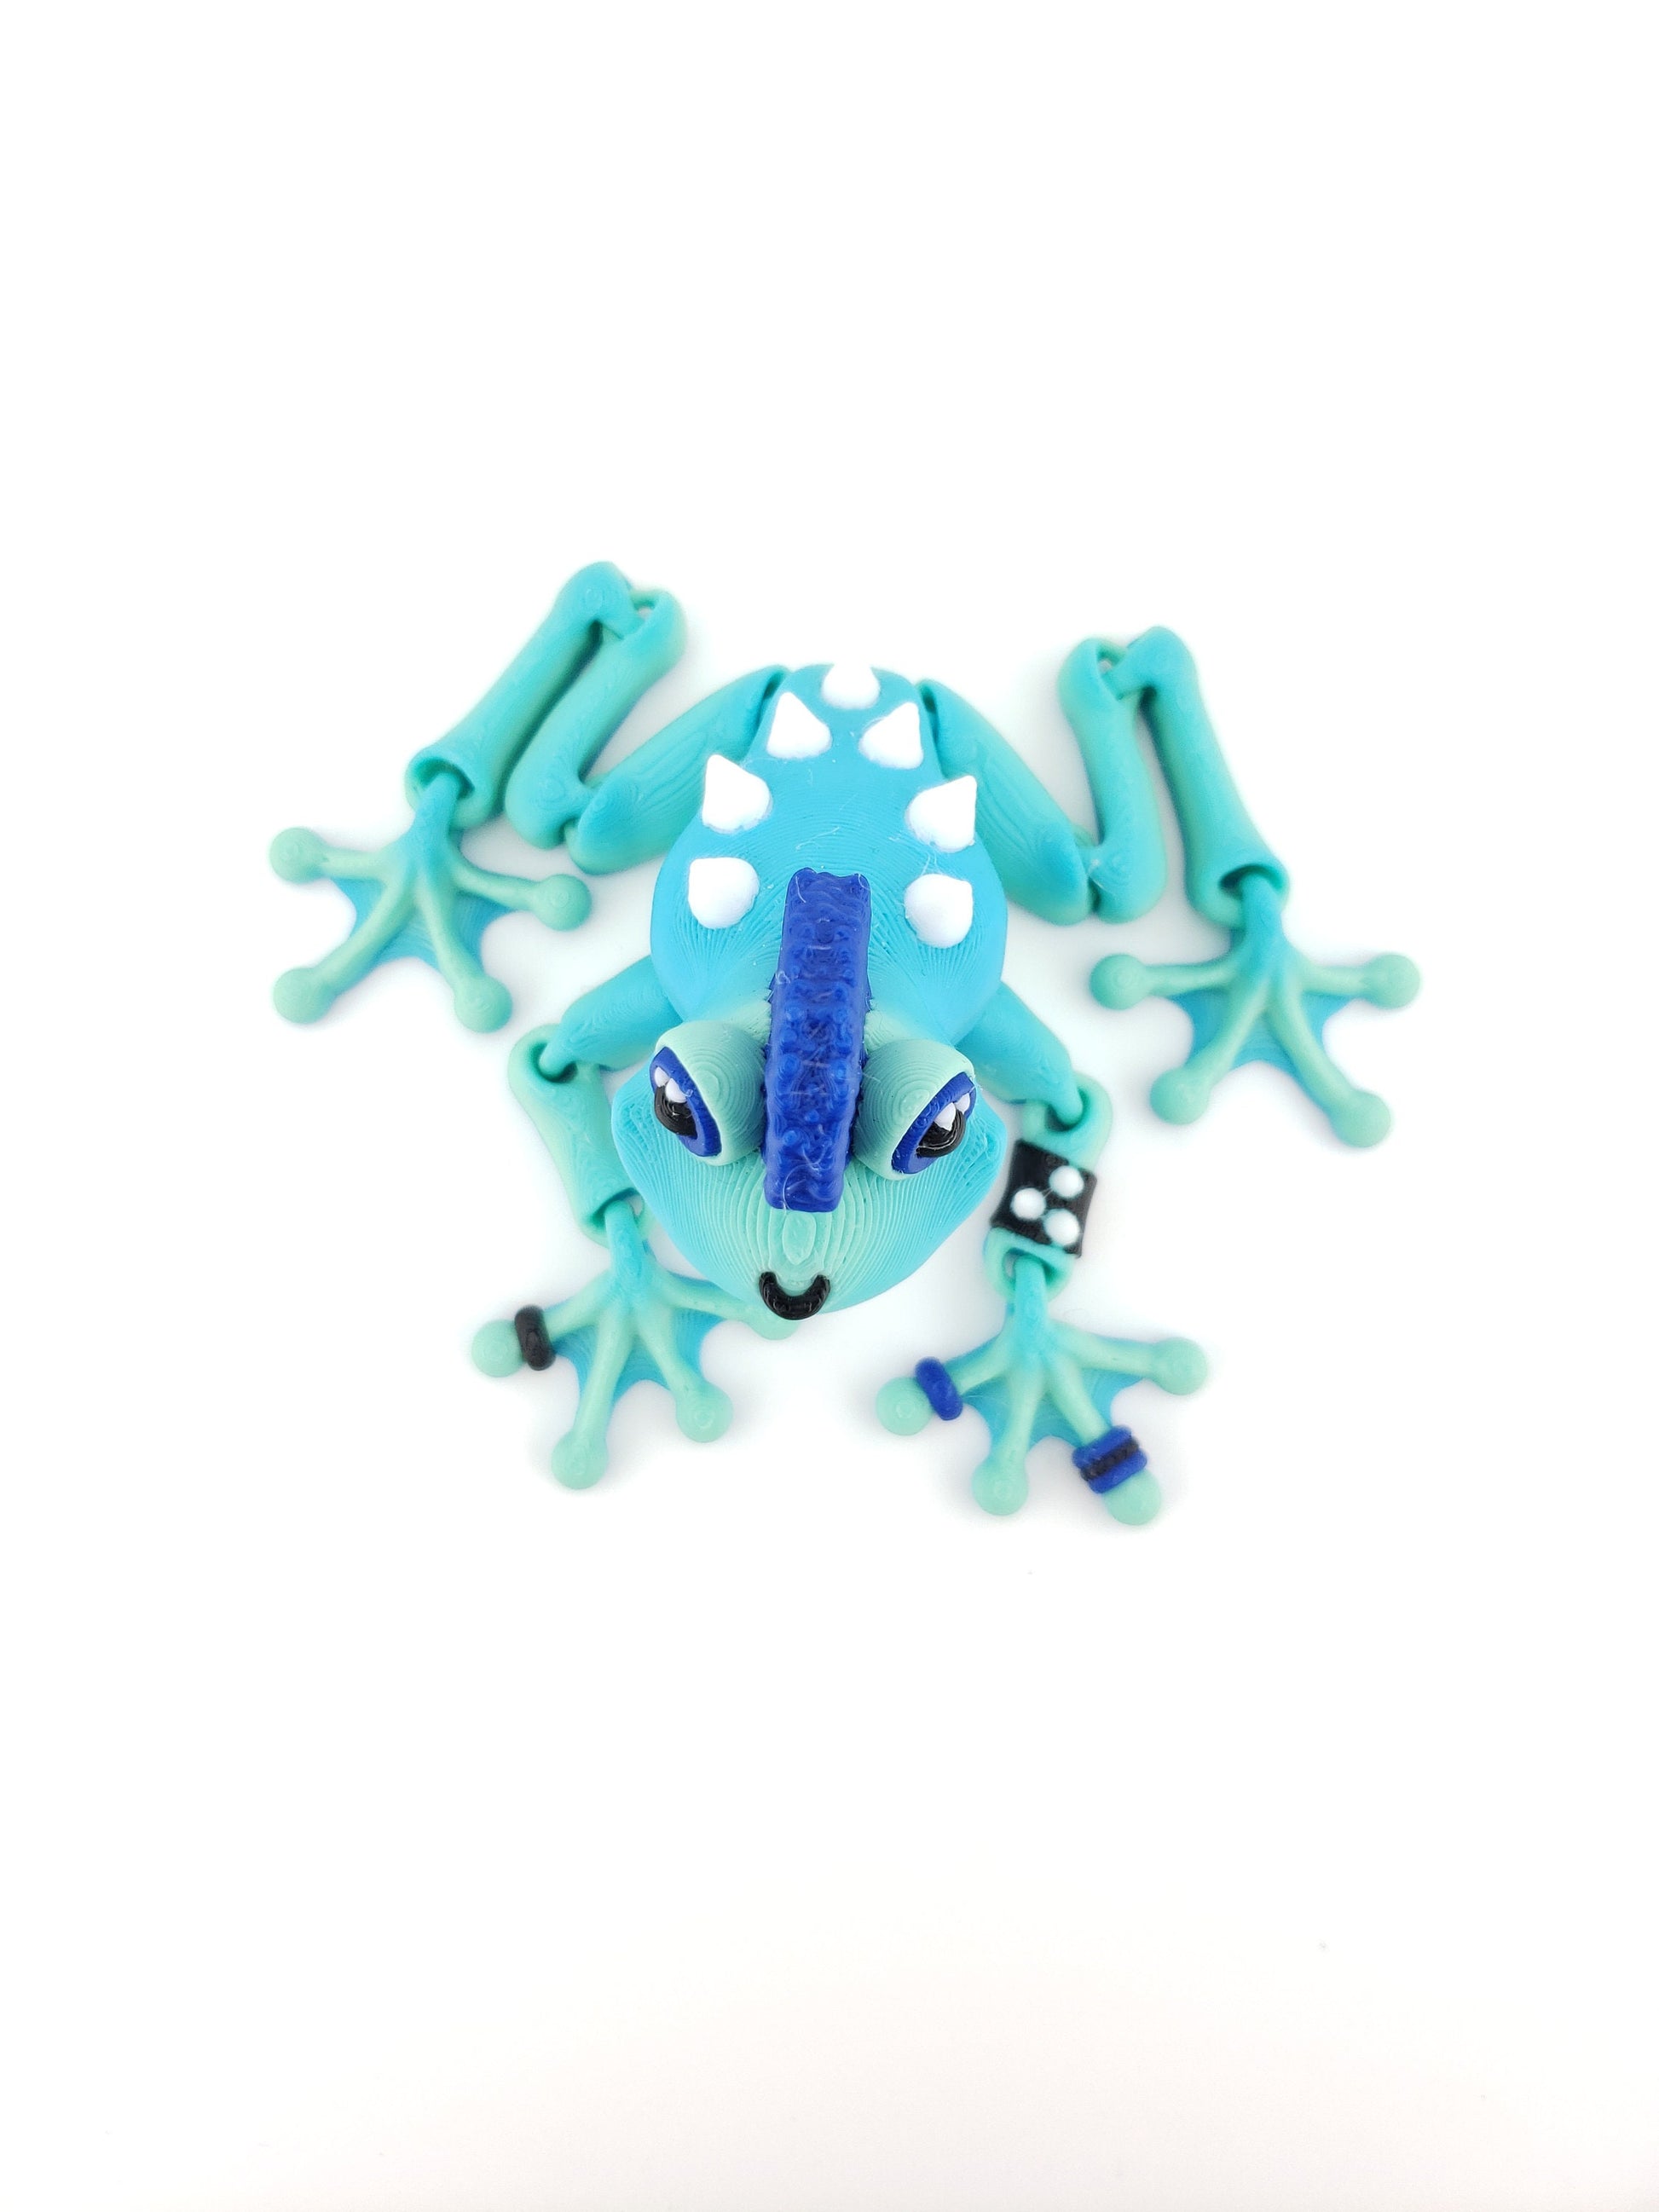 3D-Printed Articulated Punk EMO Frog Decor Desk Decor Fidget Toy - Animal Figurine - Authorized Seller